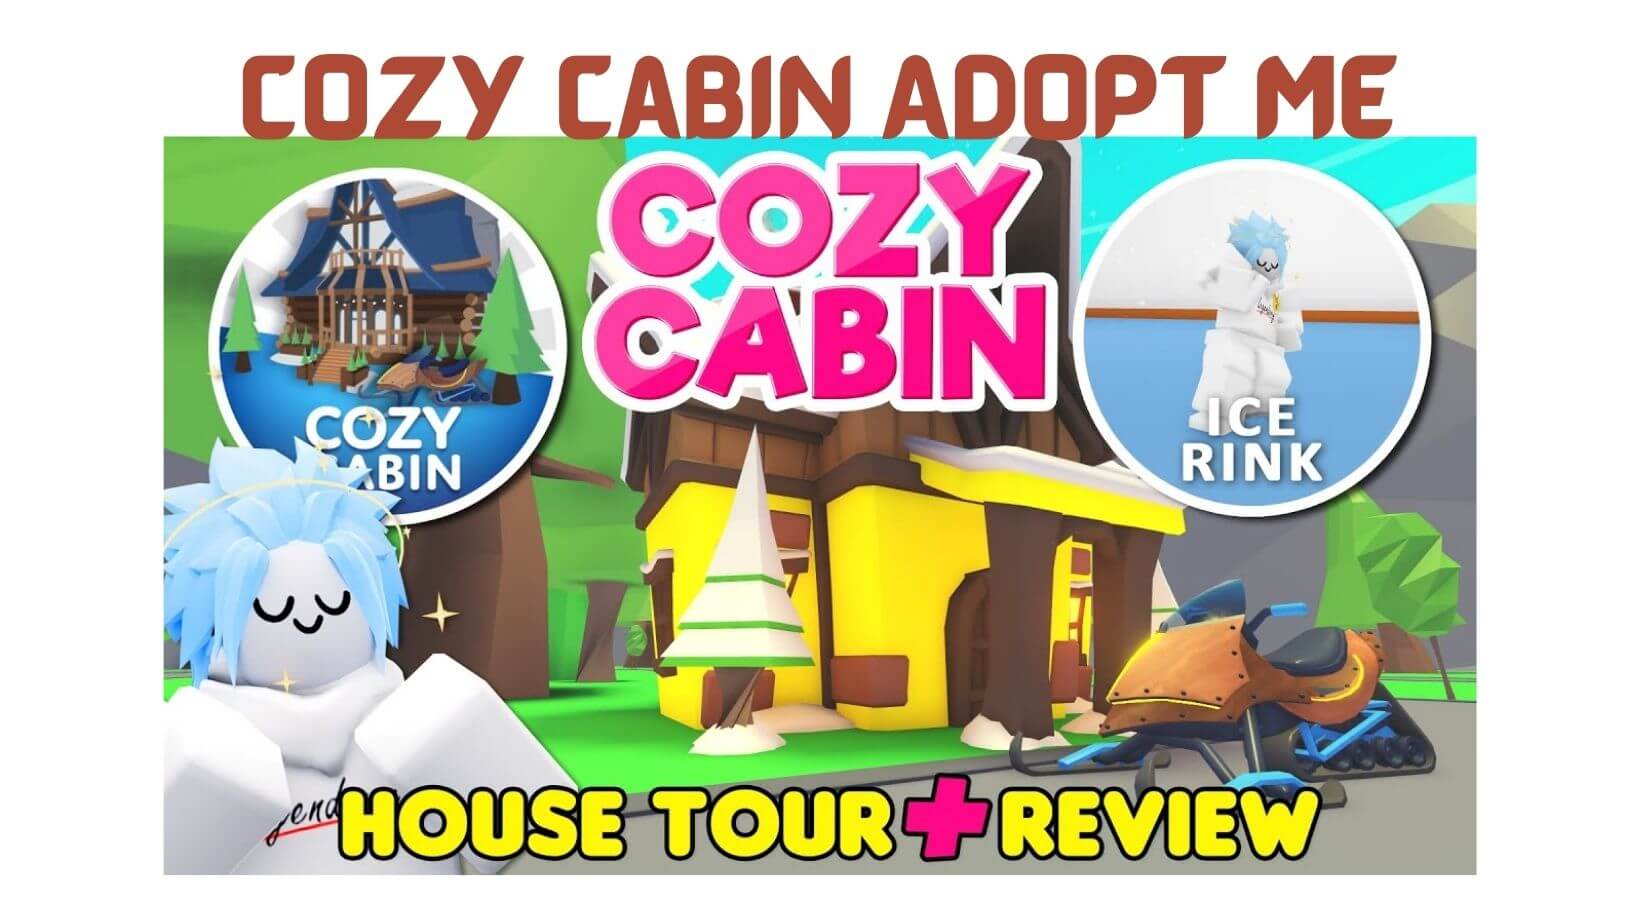 Cozy Cabin Adopt Me